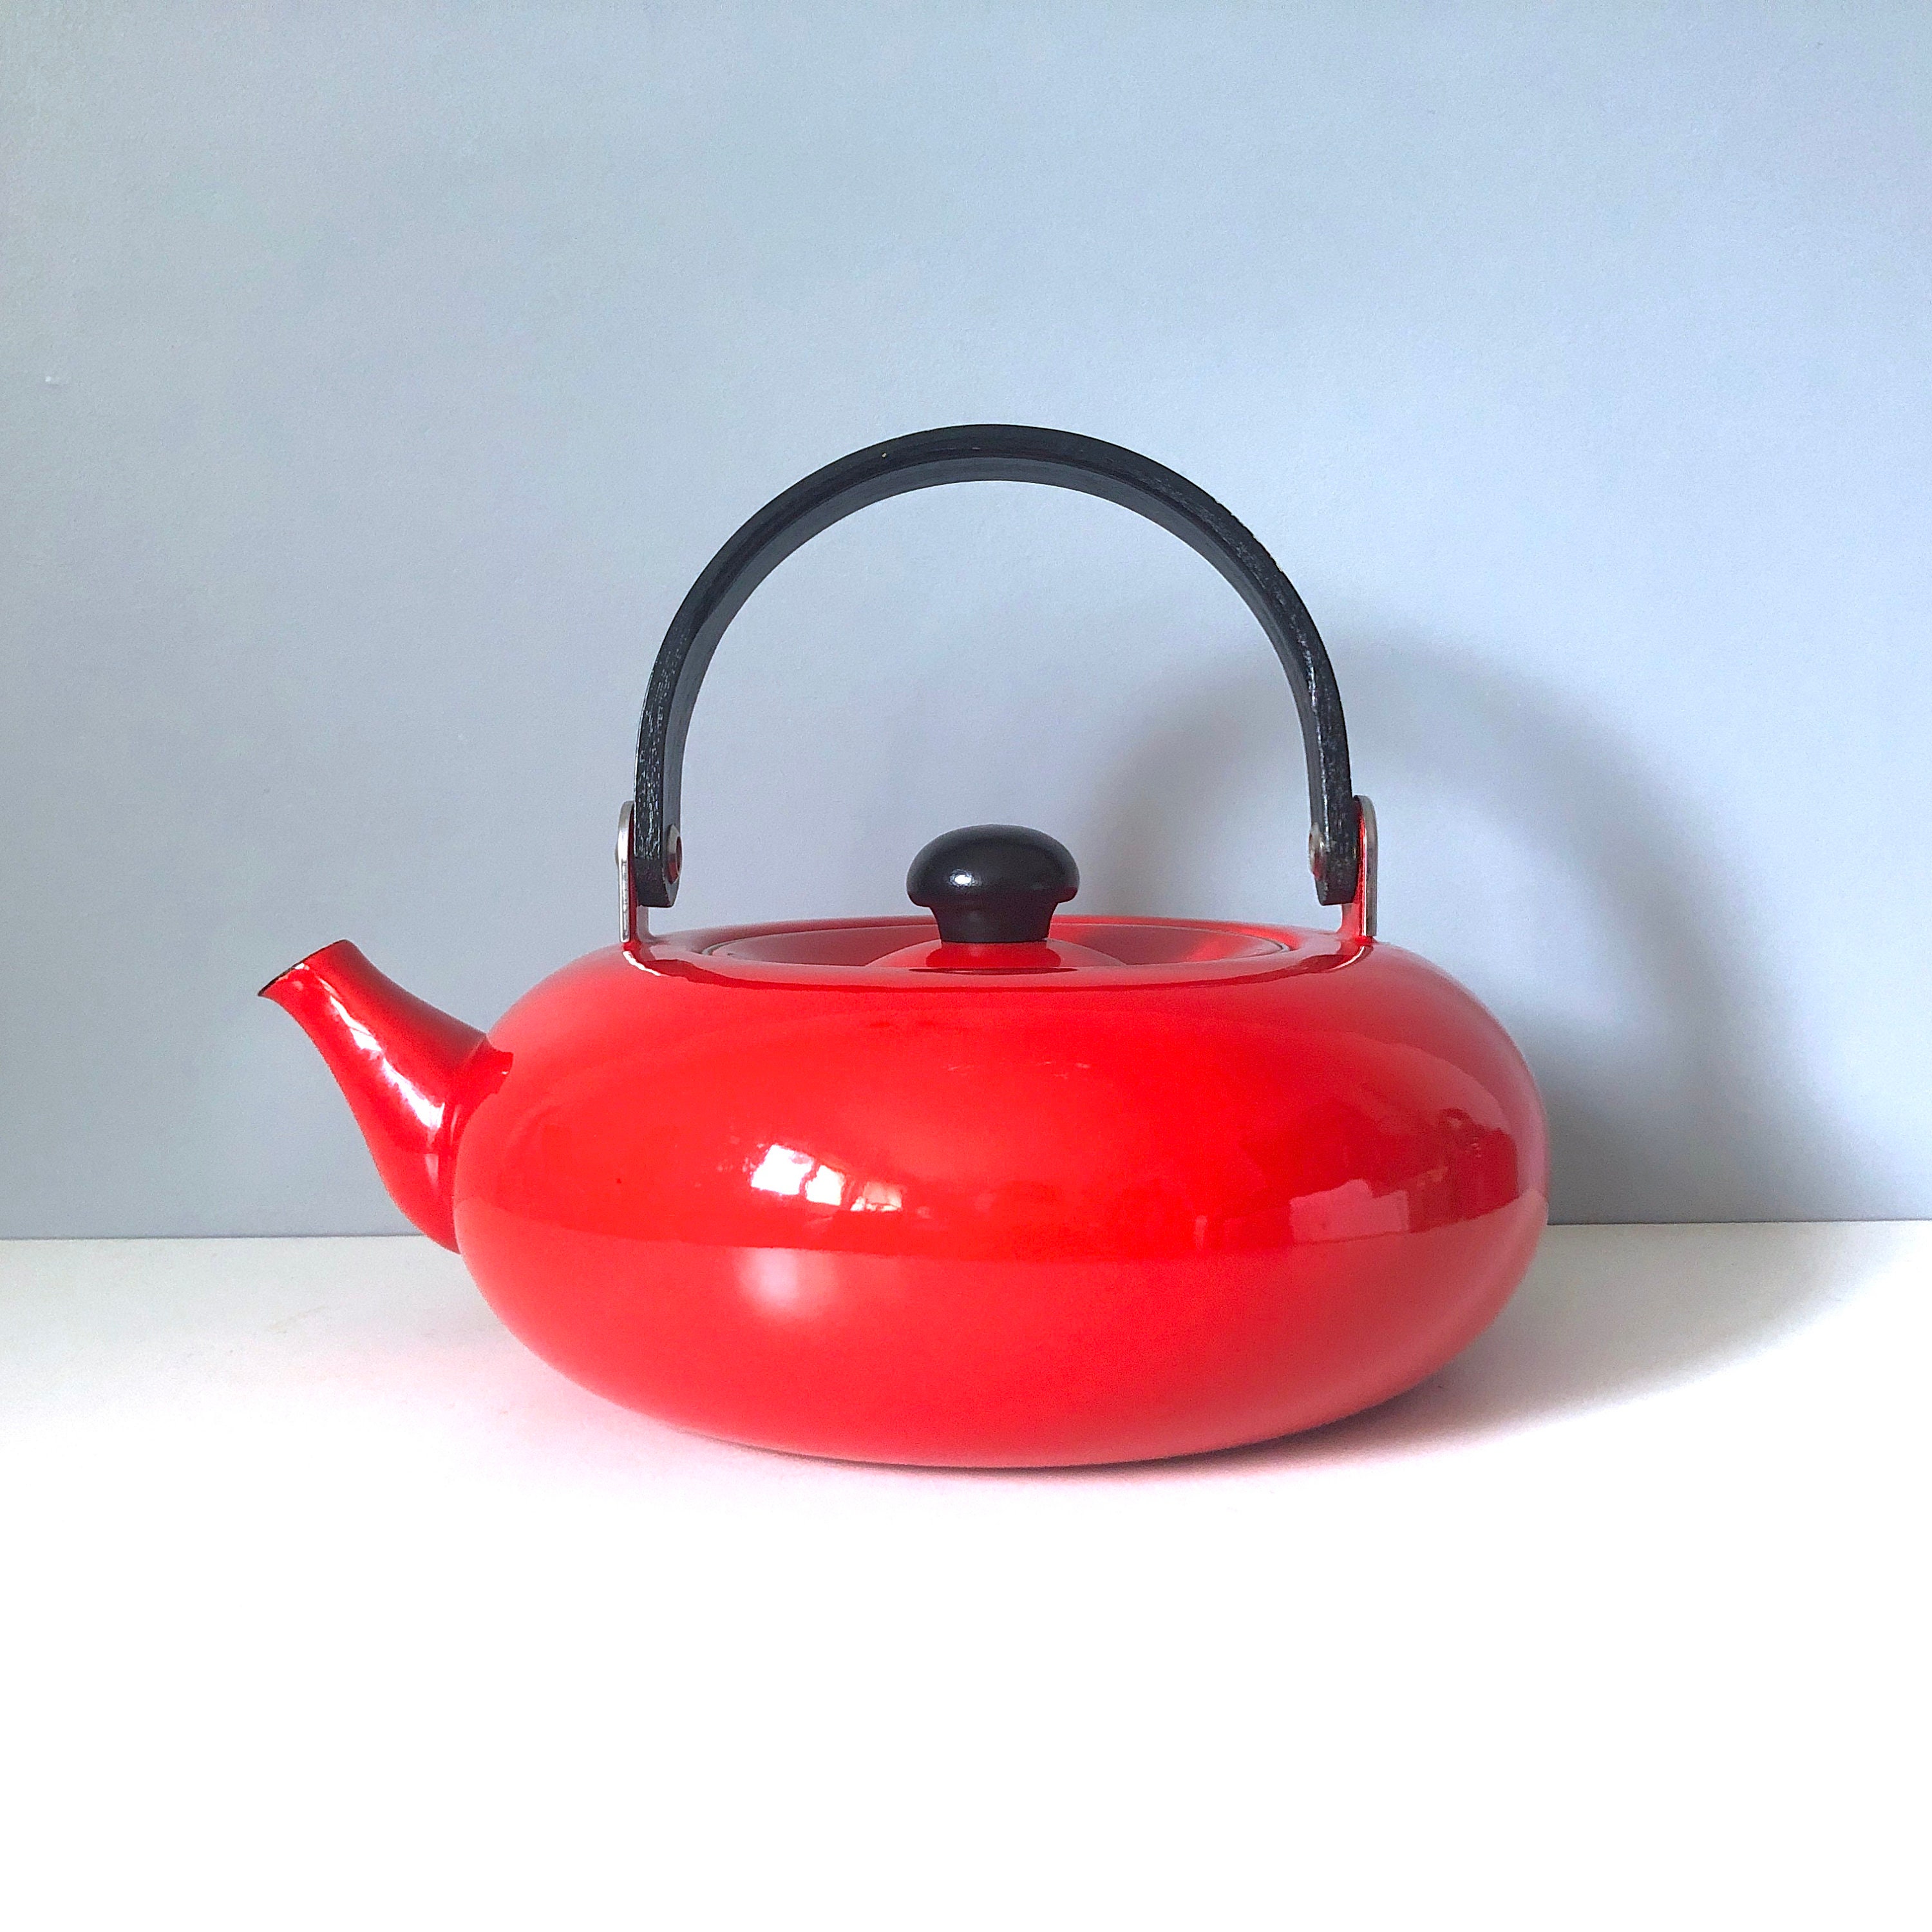  Copco Tea Kettle, 2.4 quart, Red: Home & Kitchen